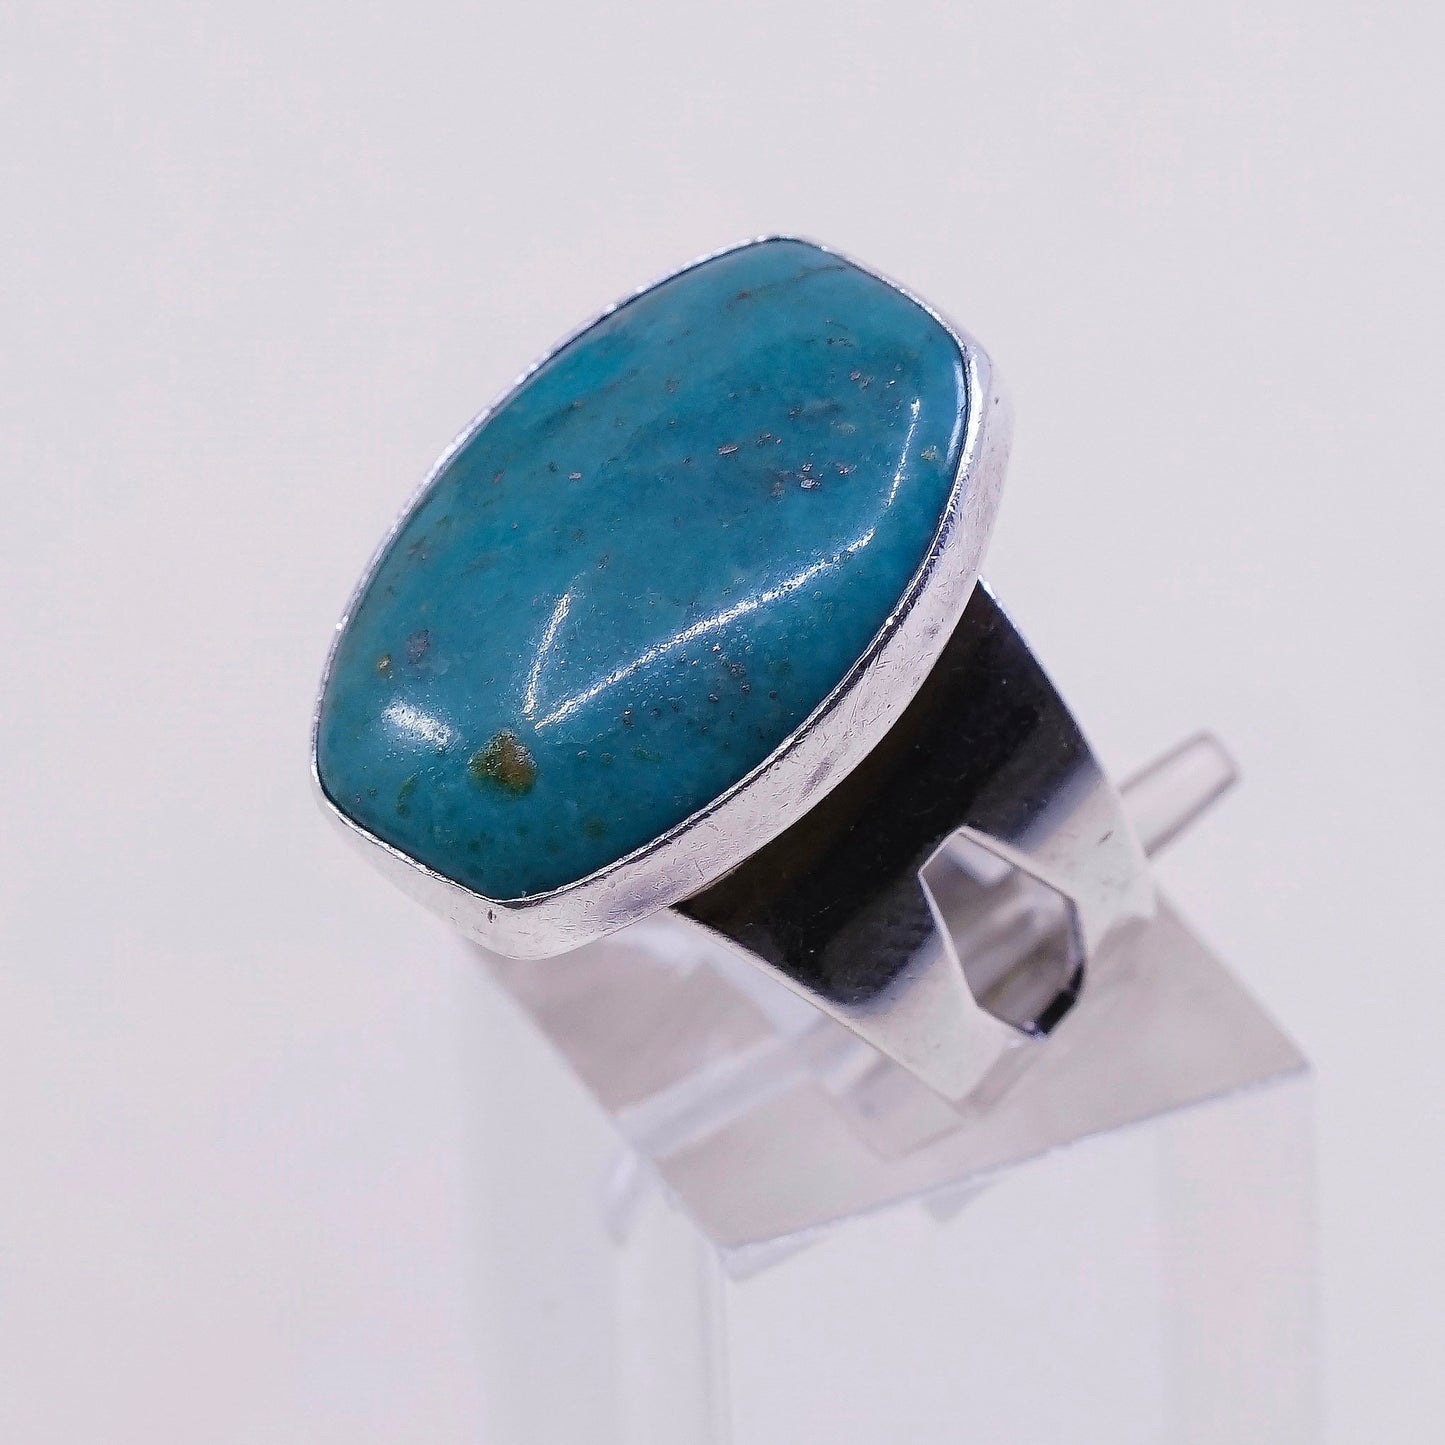 sz 7, VTG DTR sterling silver ring, handmade 925 ring w/ turquoise